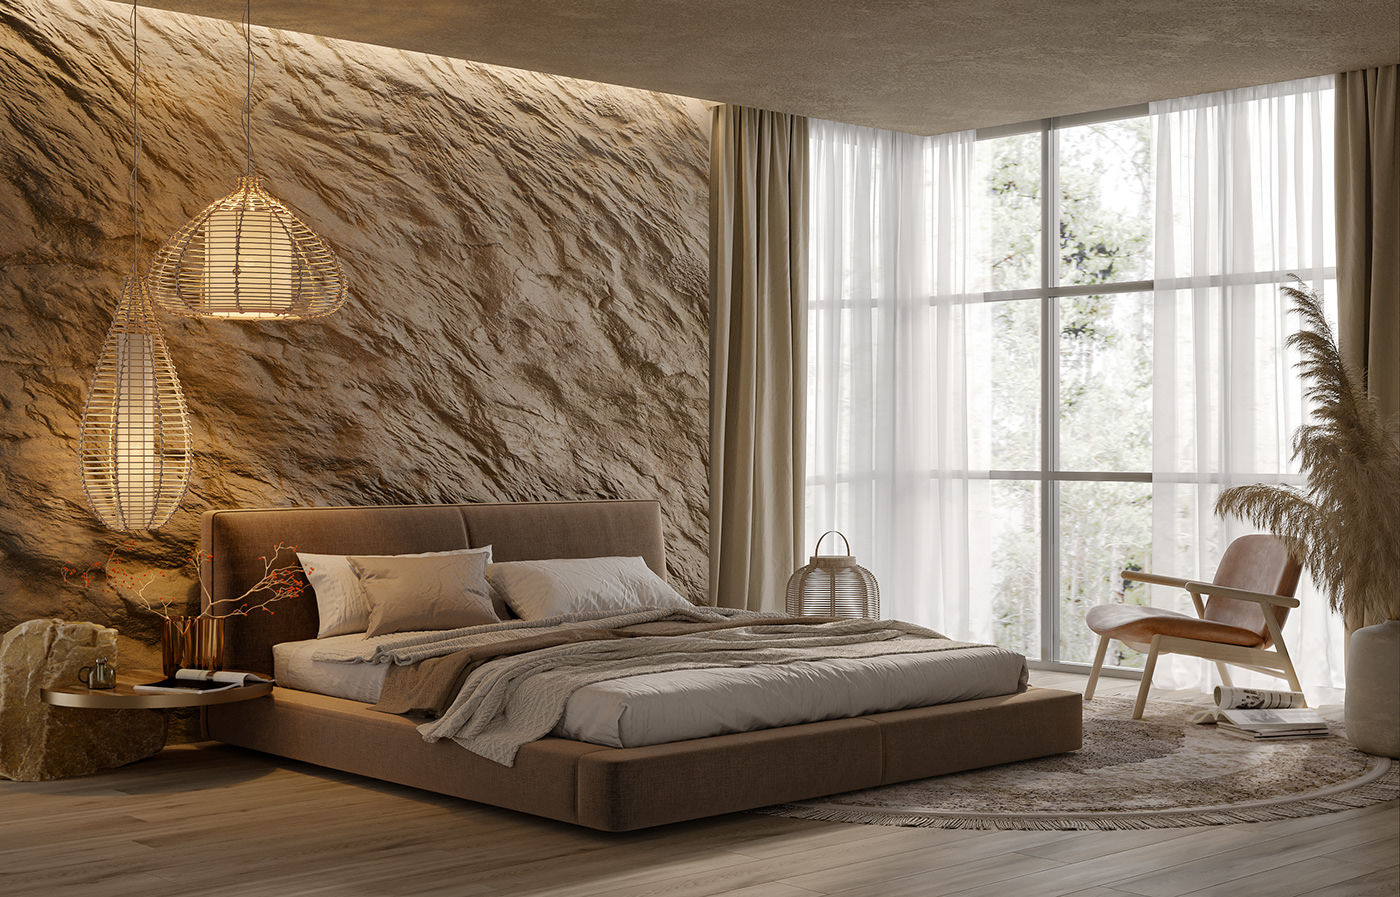 bed bedroom cofeetable design furniture Interior interiordesign light magazine photo